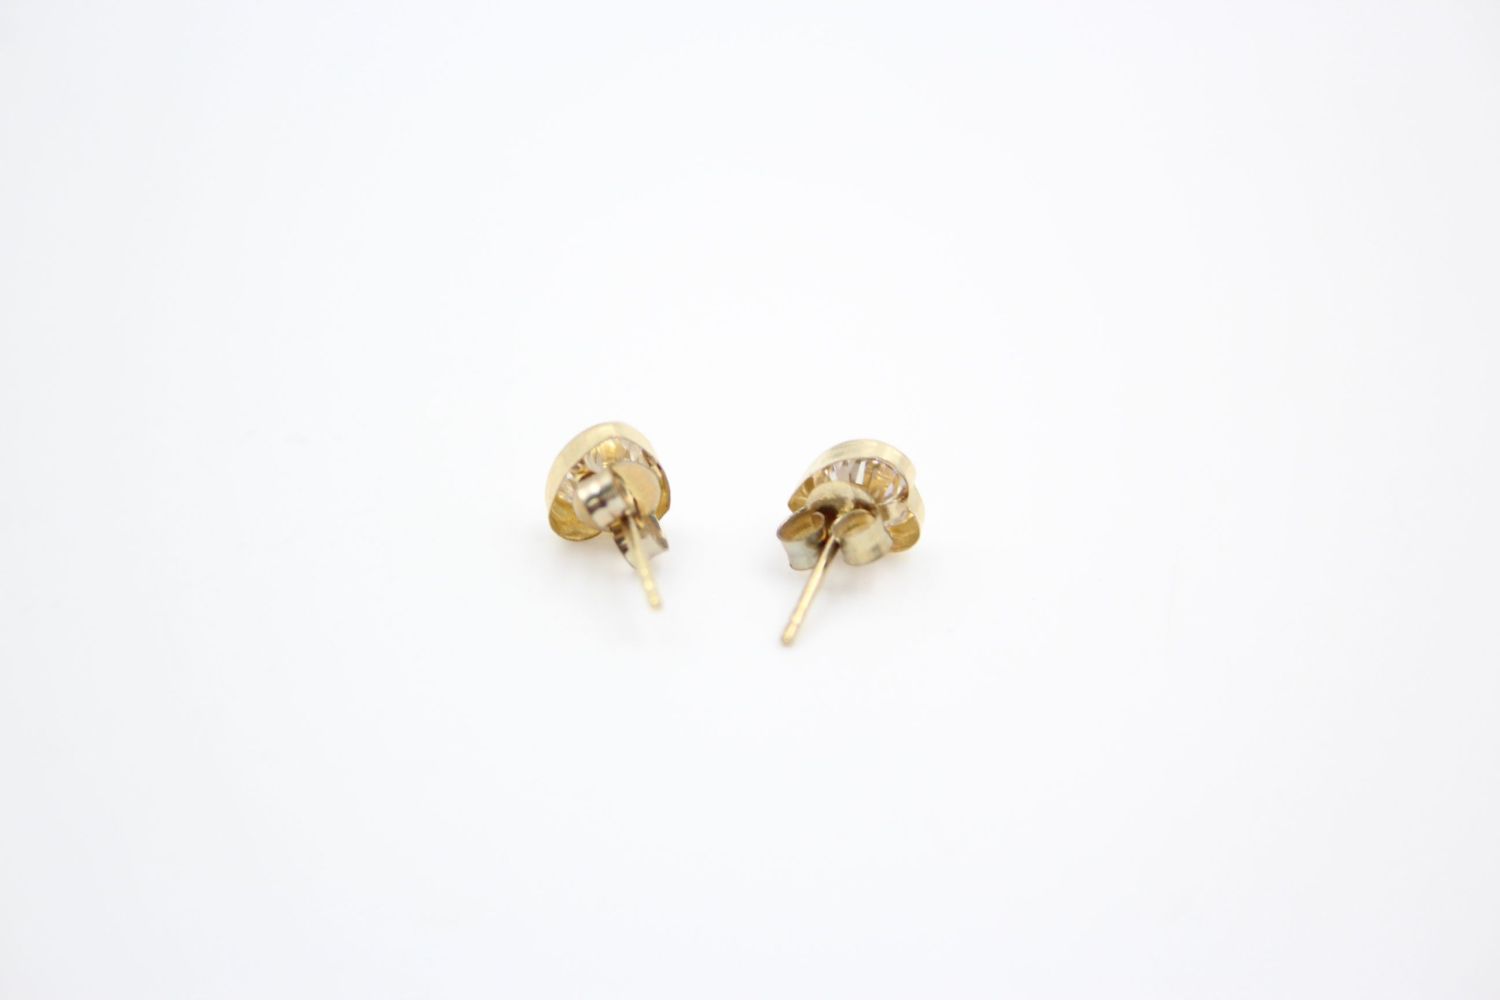 2 x 9ct gold gemstone stud earrings 1.6 grams gross - Image 9 of 10